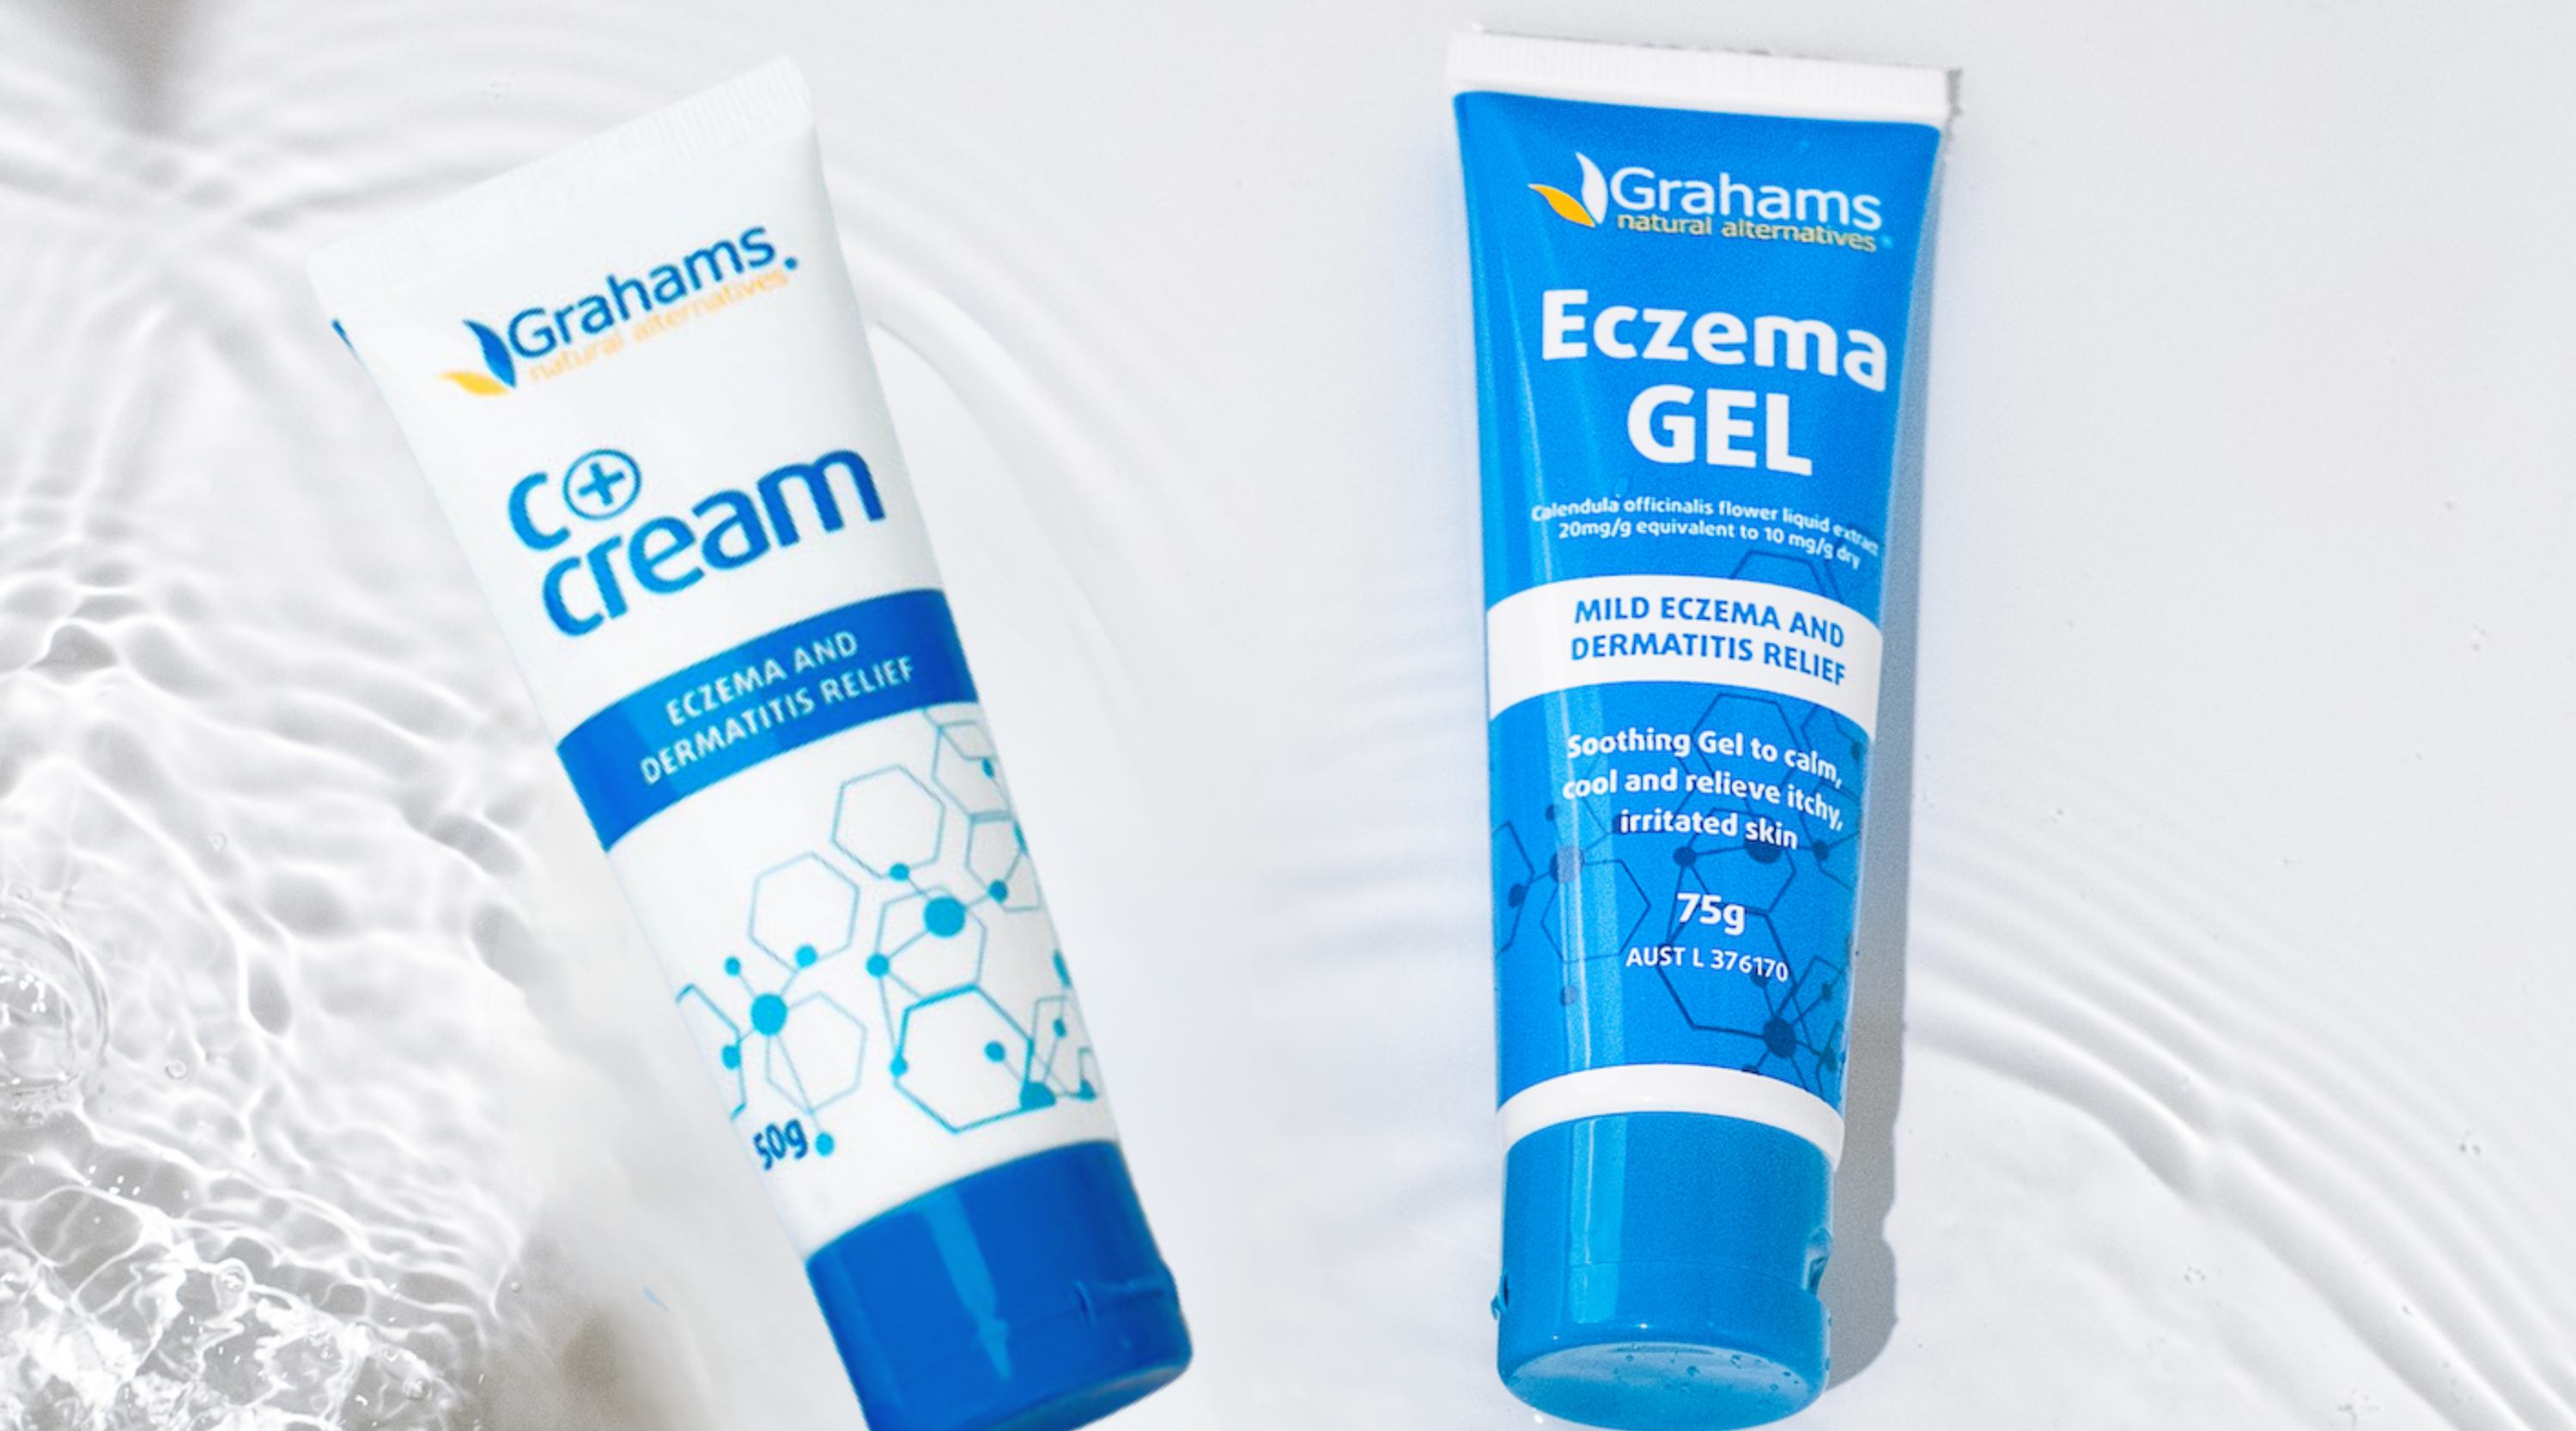 C+ Cream VS Eczema Gel